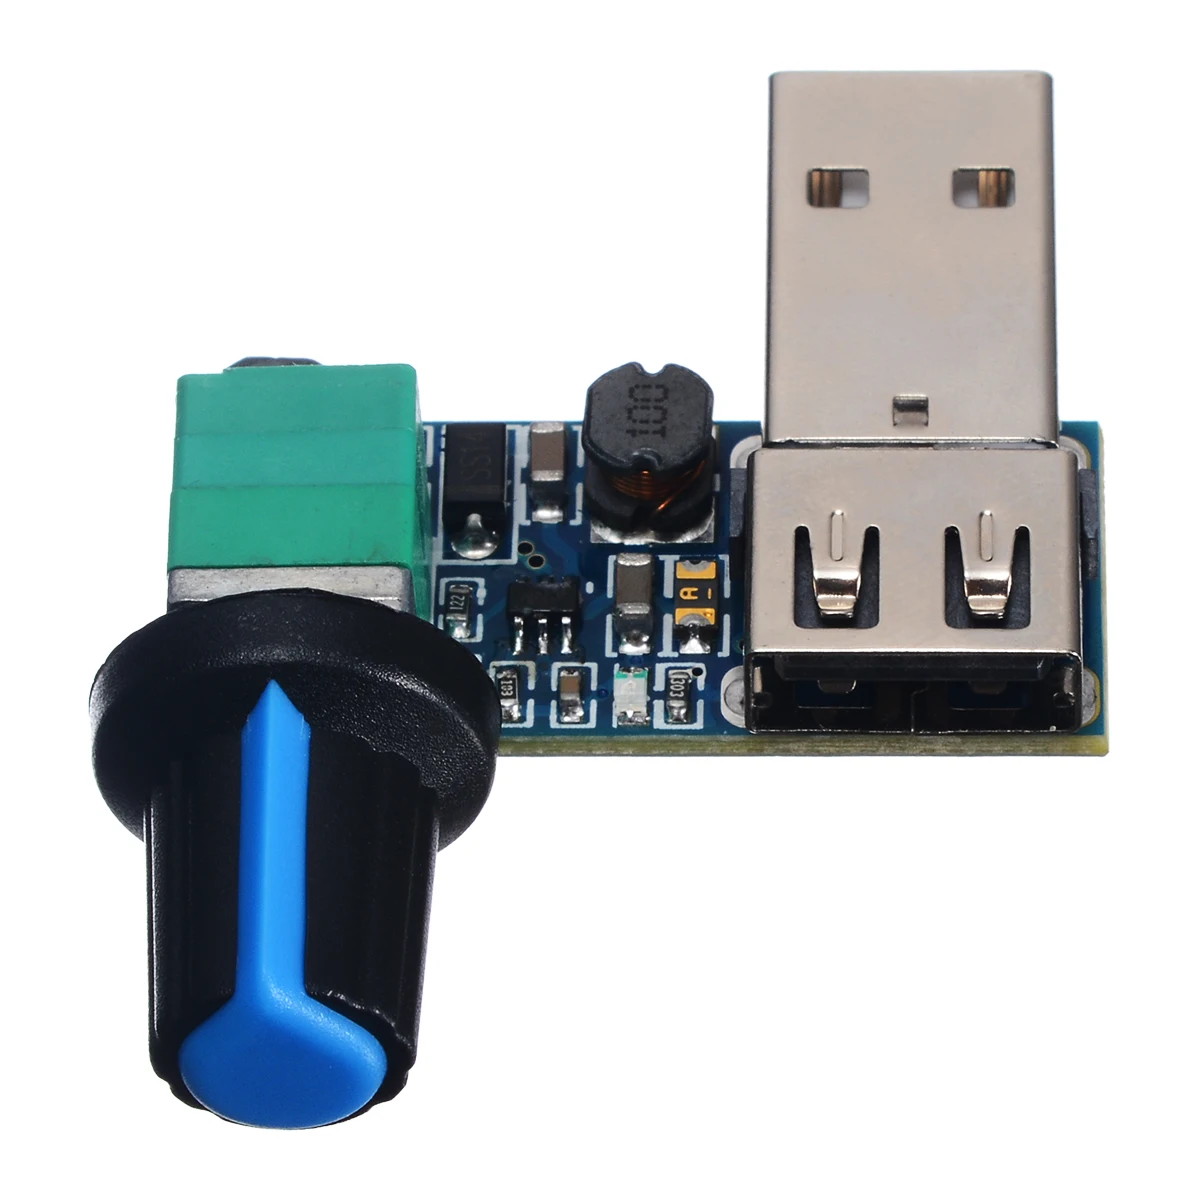 1* 5V to 12V USB Fan Stepless Speed Controller Regulator Variable Z0K1 O2L6 